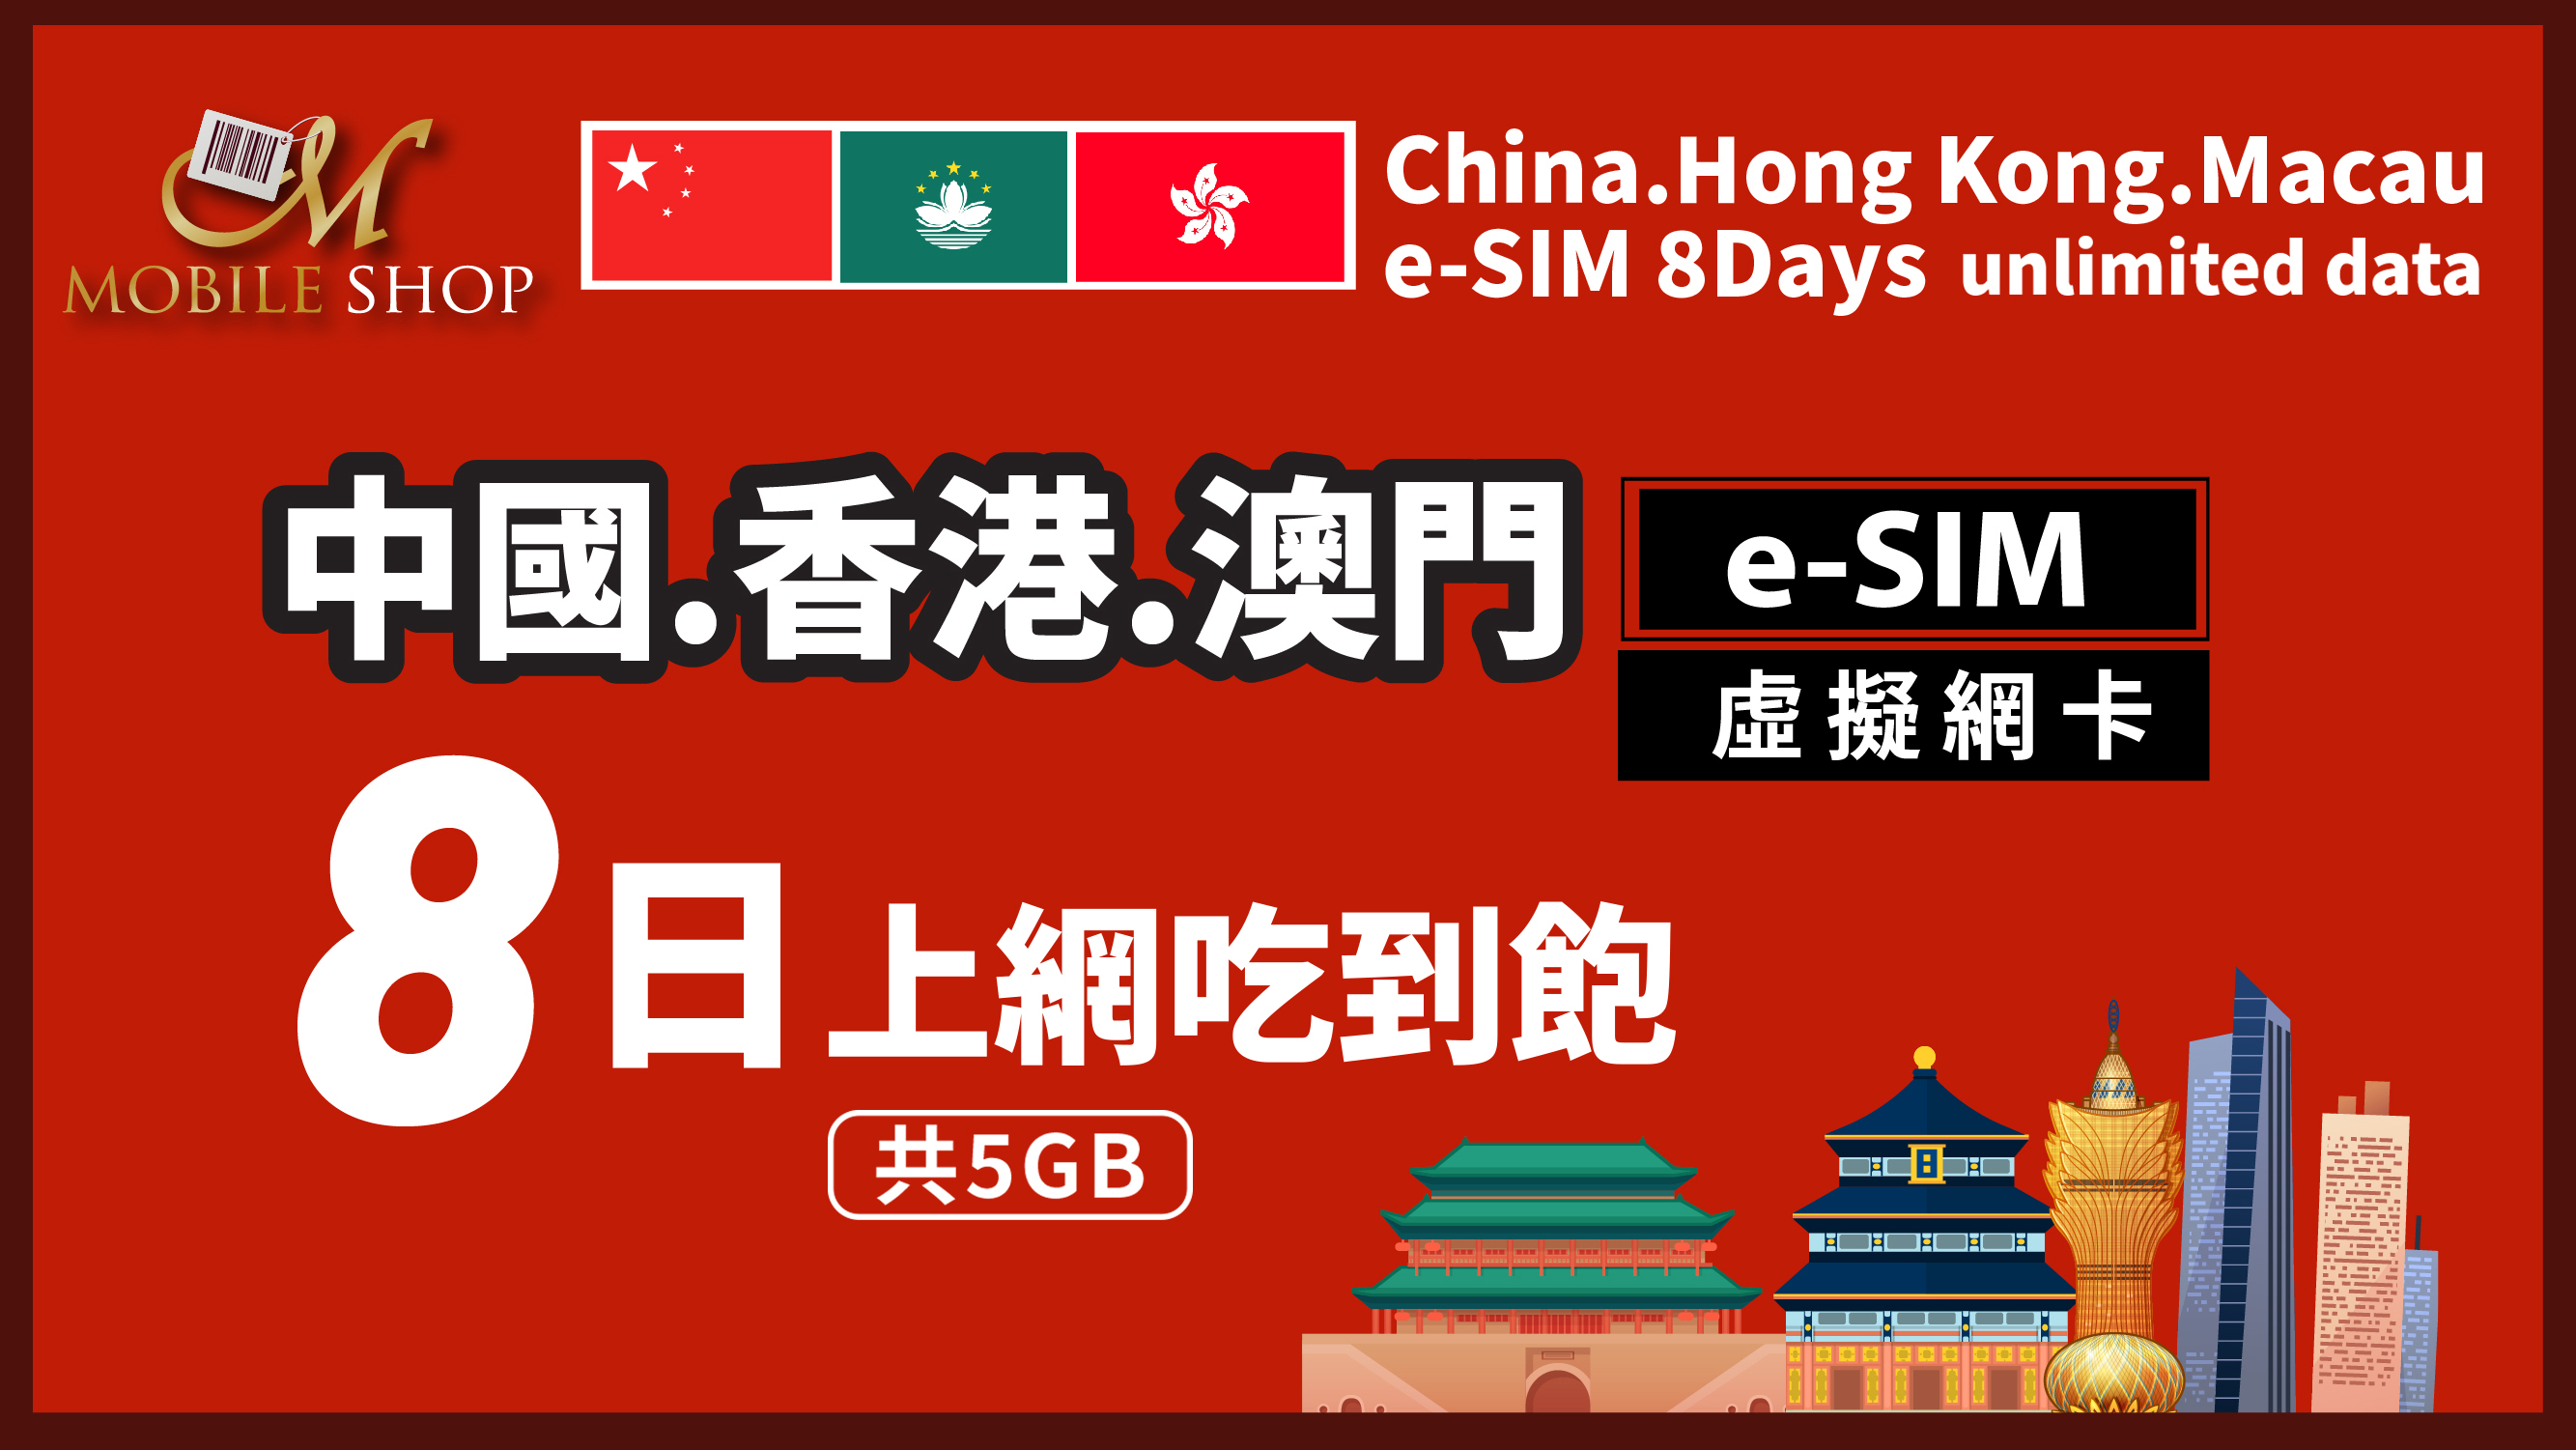 eSIM_China.Hong Kong.Macau-8Days/5GB unlimited data